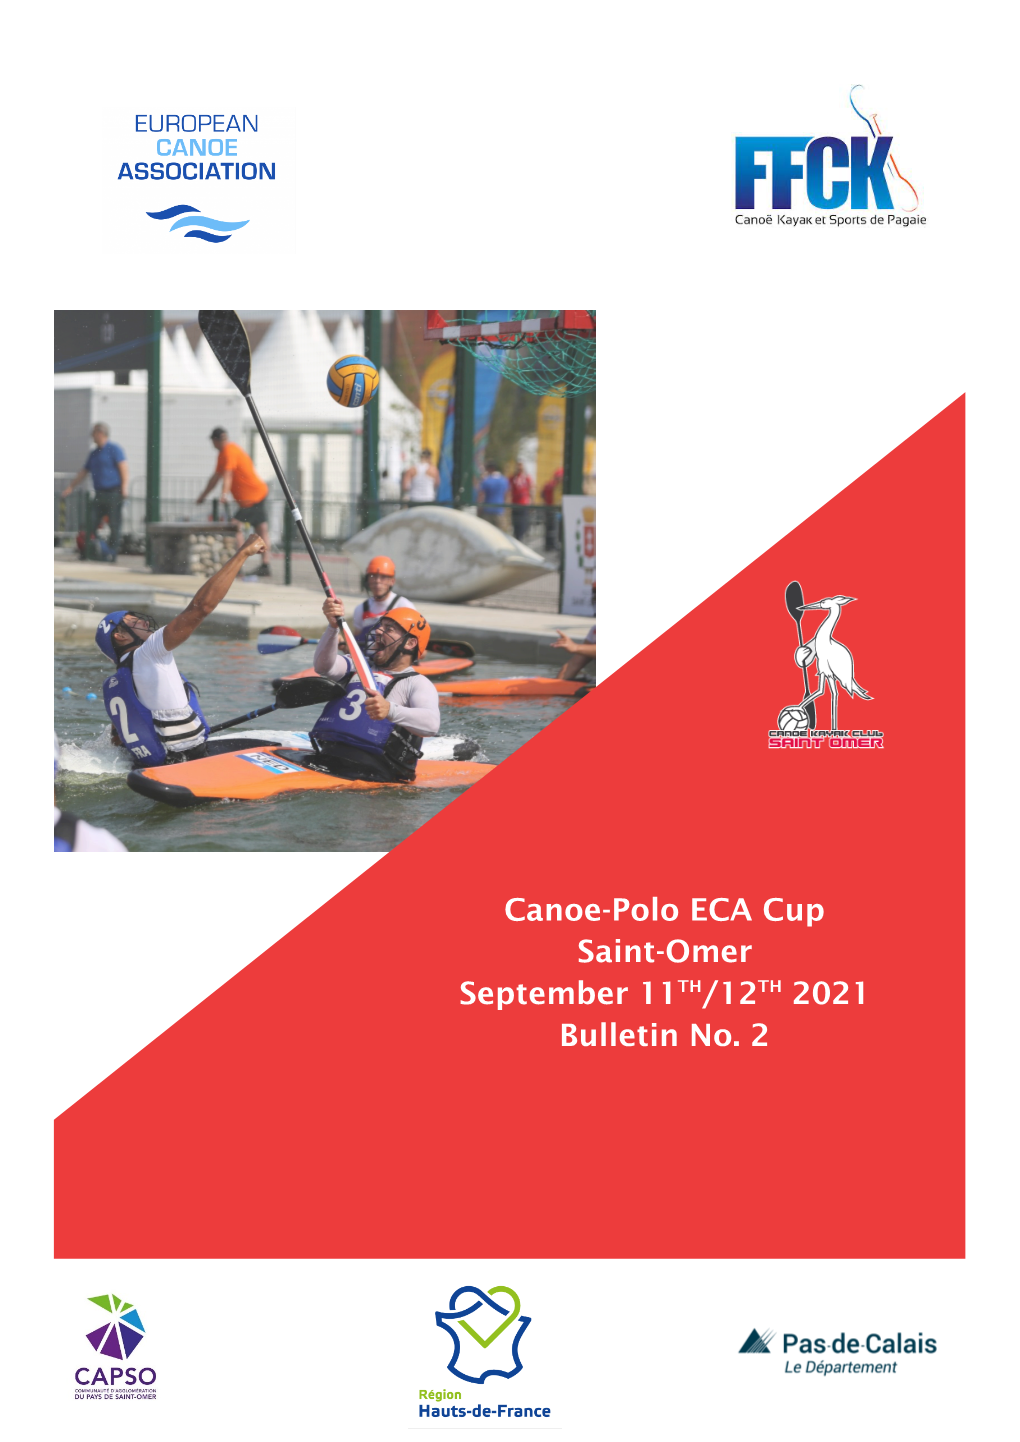 Canoe-Polo ECA Cup Saint-Omer September 11TH/12TH 2021 Bulletin No